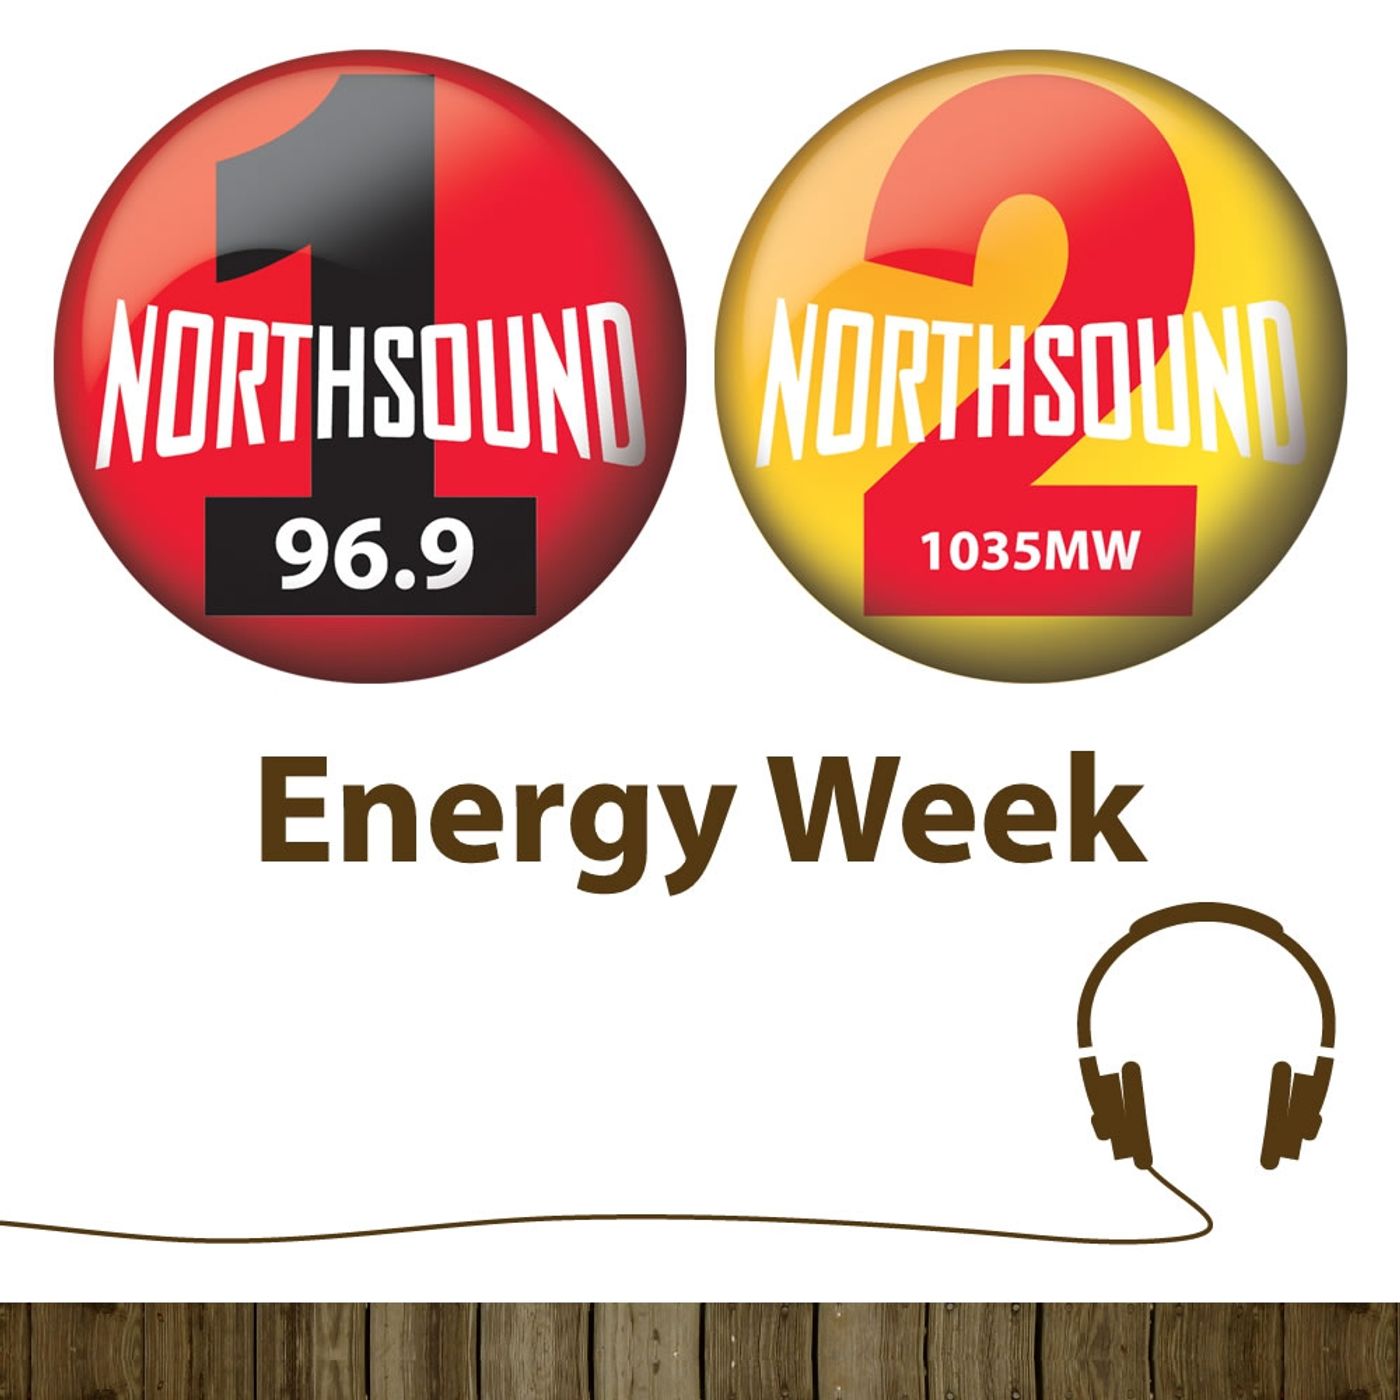 Northsound Energy Week 18.7.14